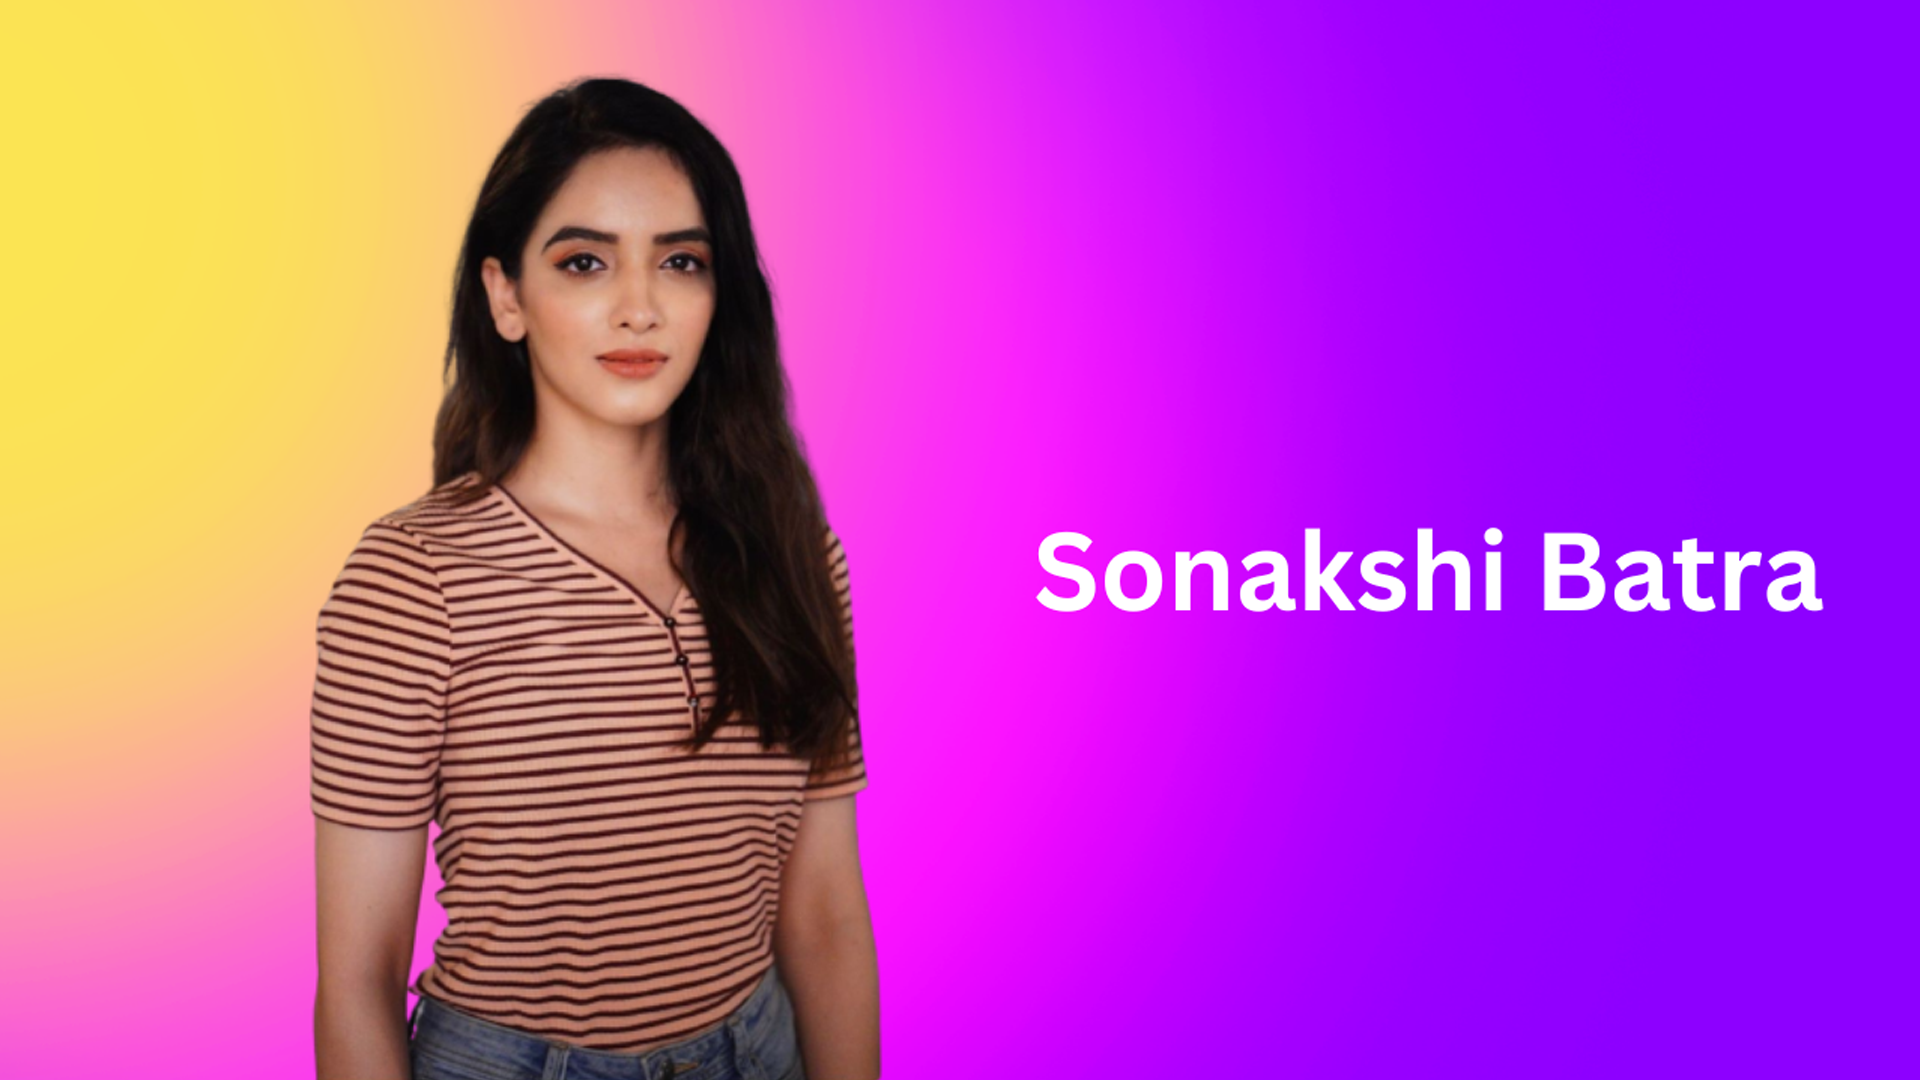 Sonakshi Batra Biography